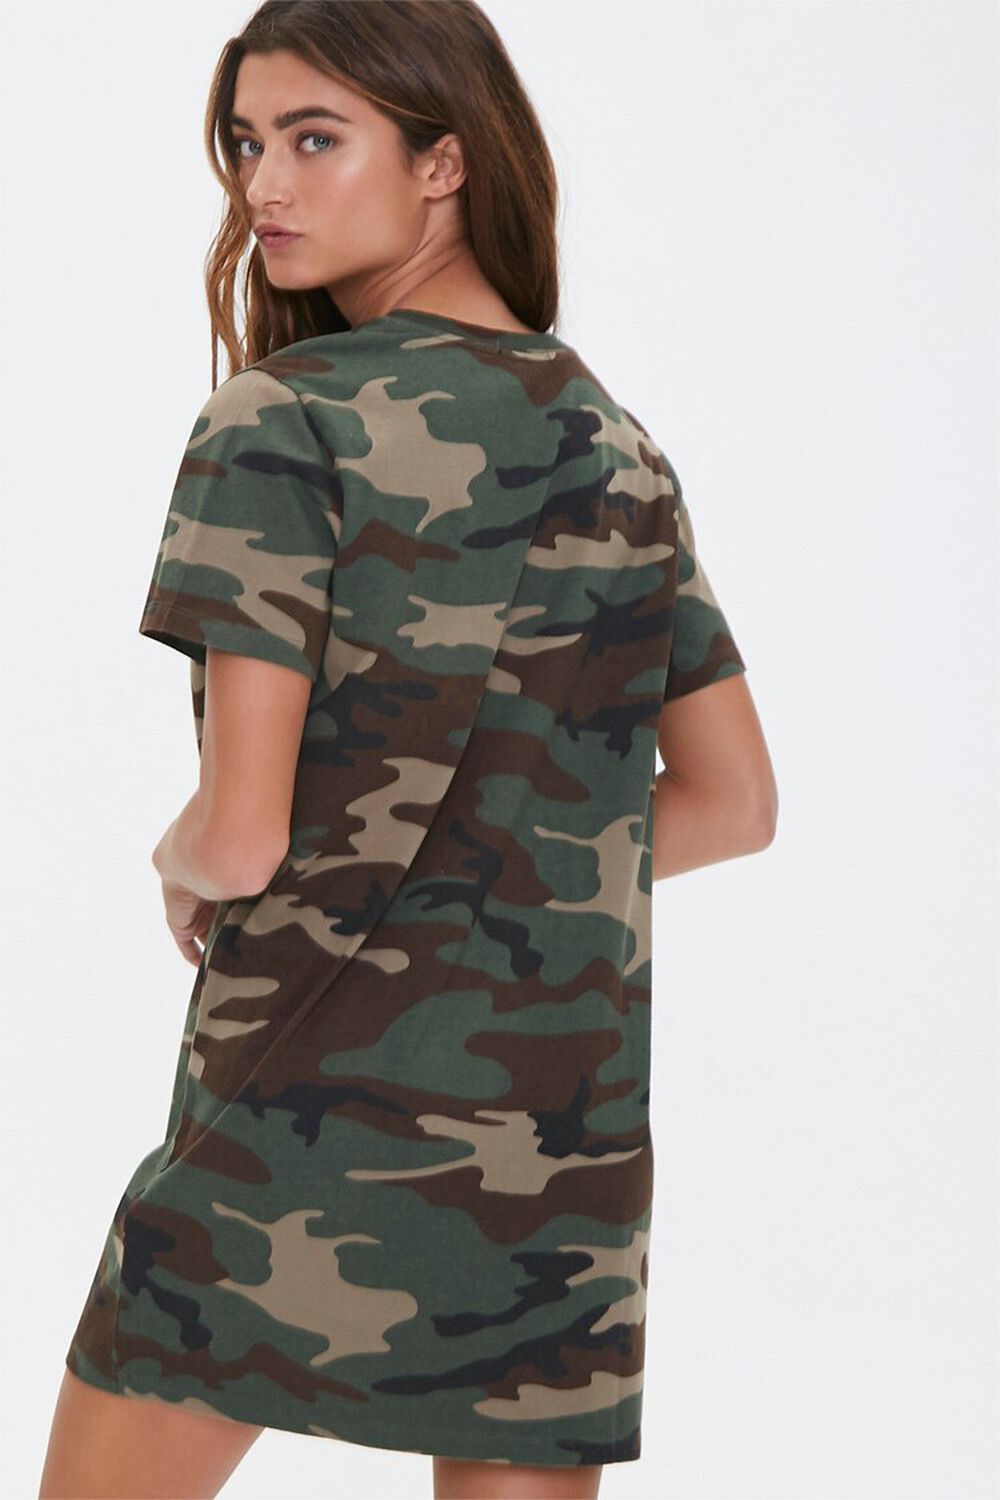 OLIVE/BLACK Camo Print T-Shirt Dress, image 1